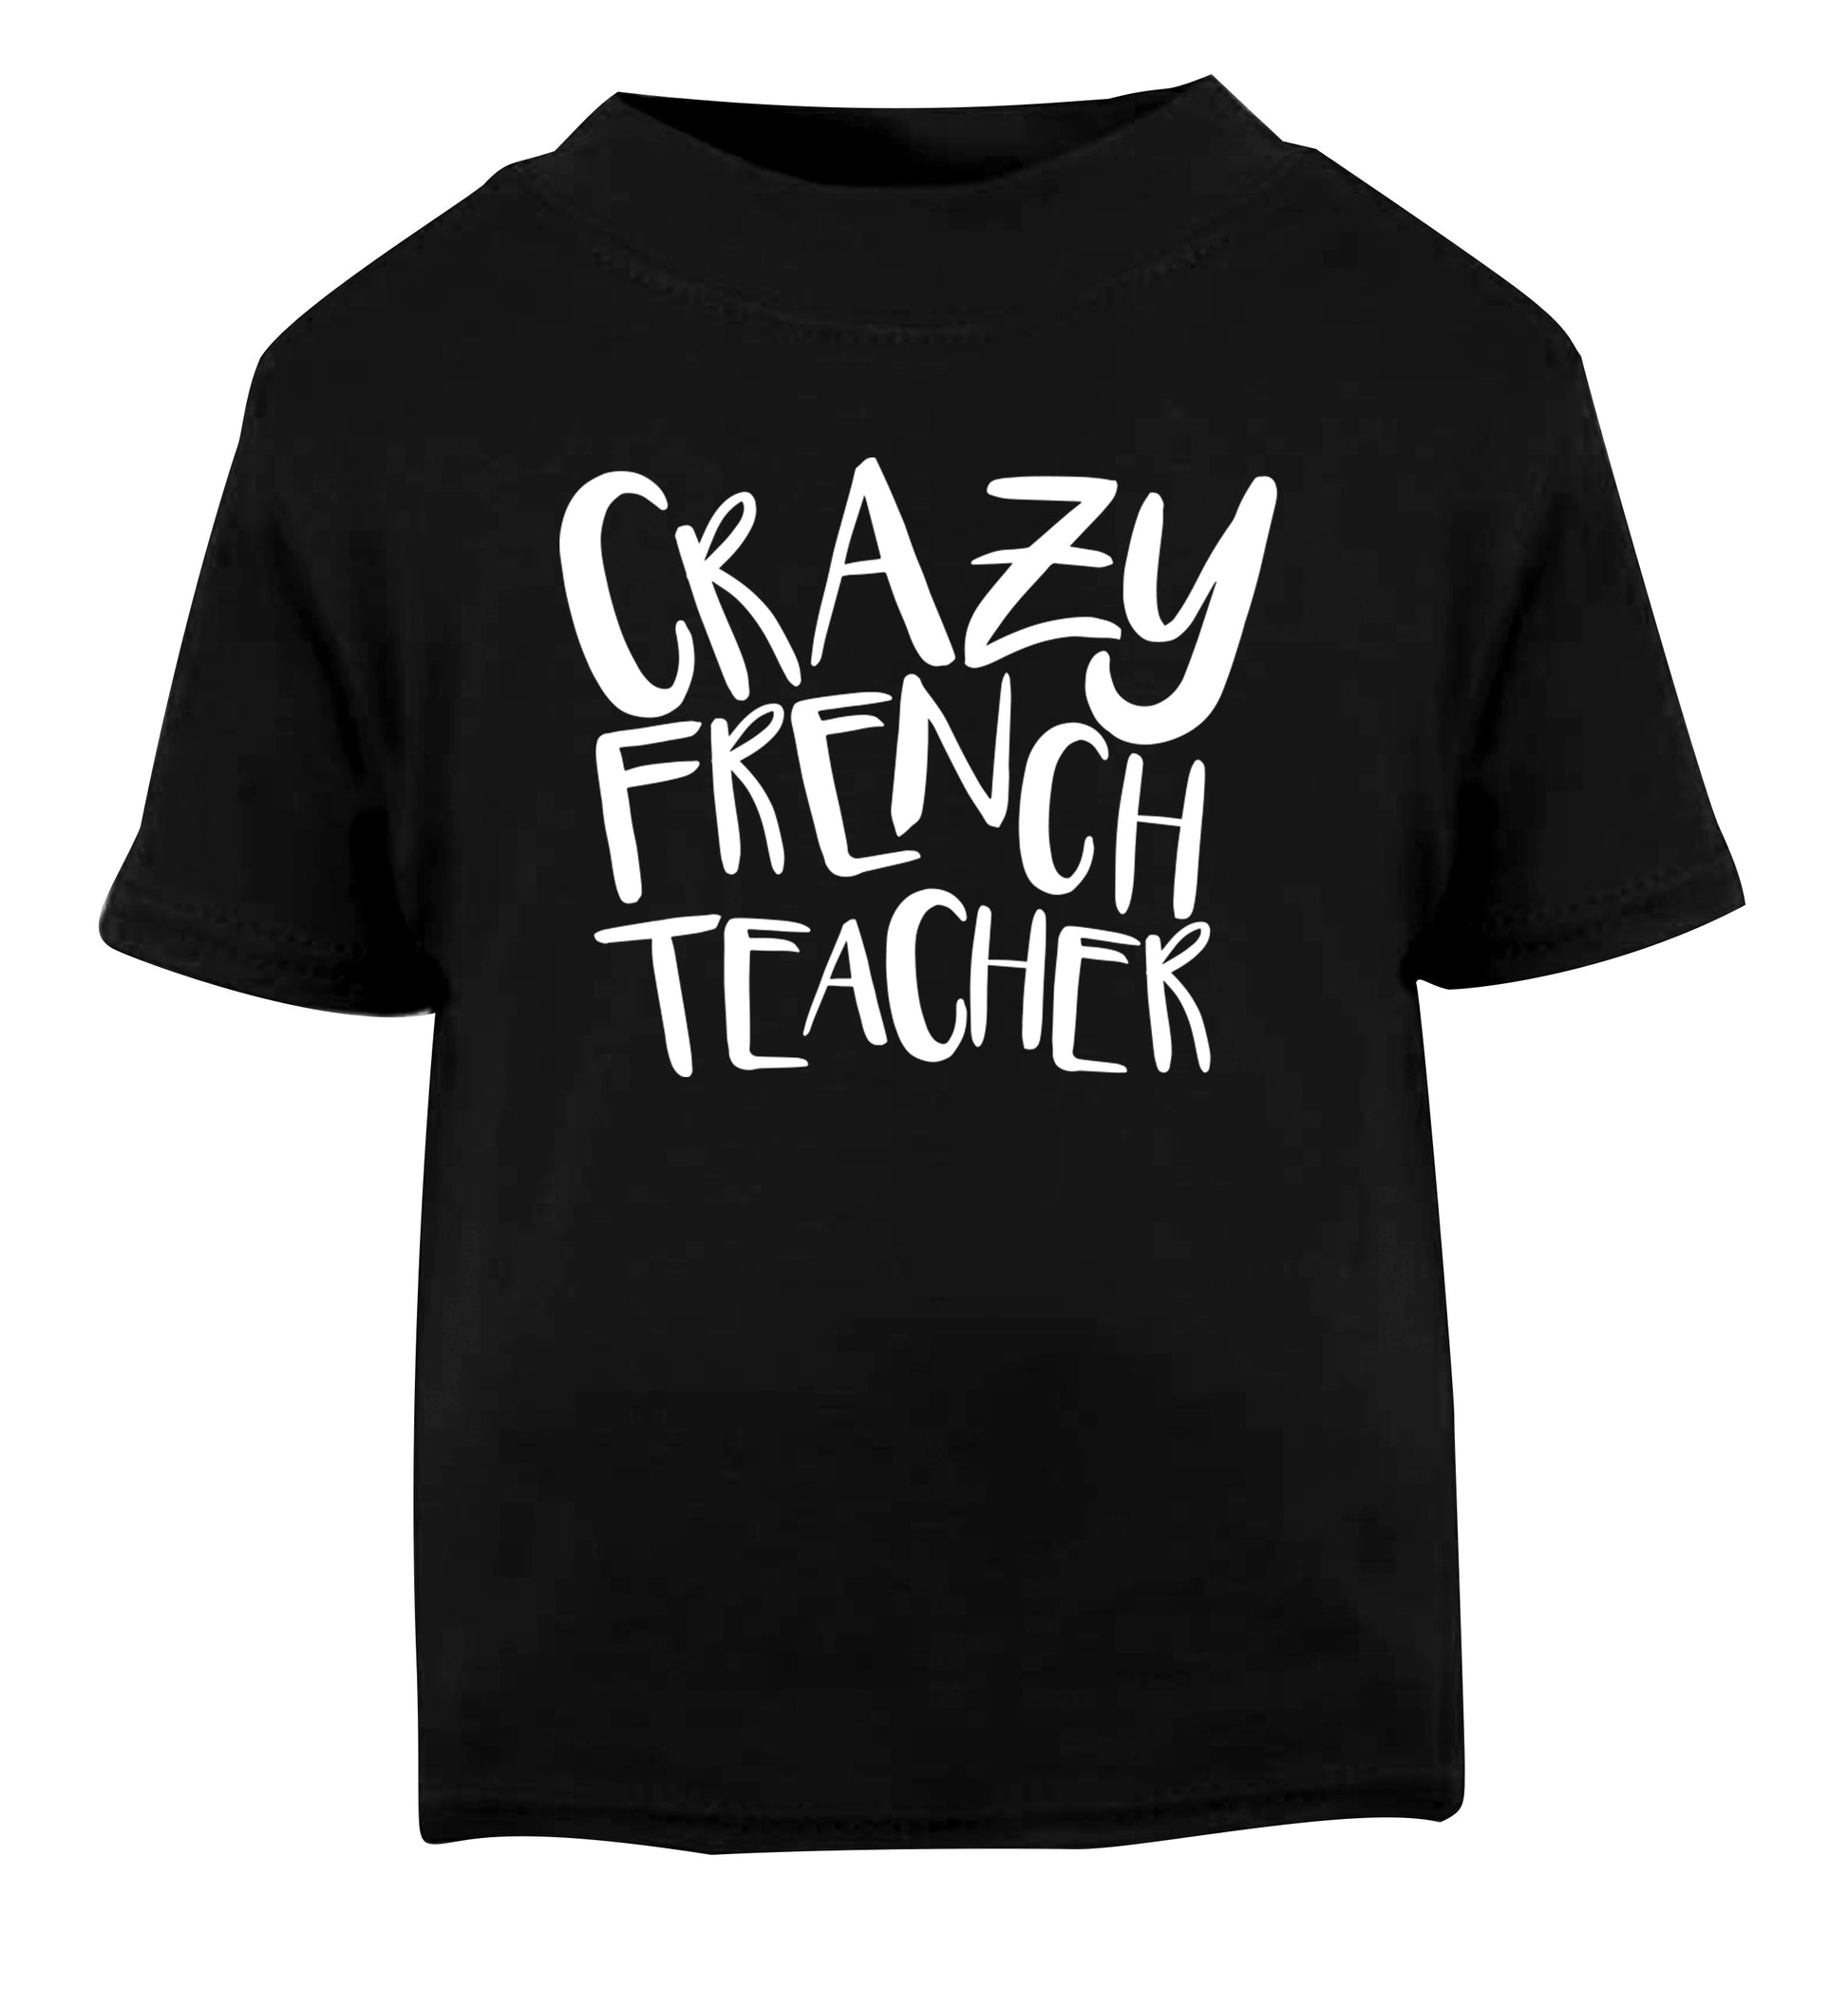 Crazy french teacher Black Baby Toddler Tshirt 2 years